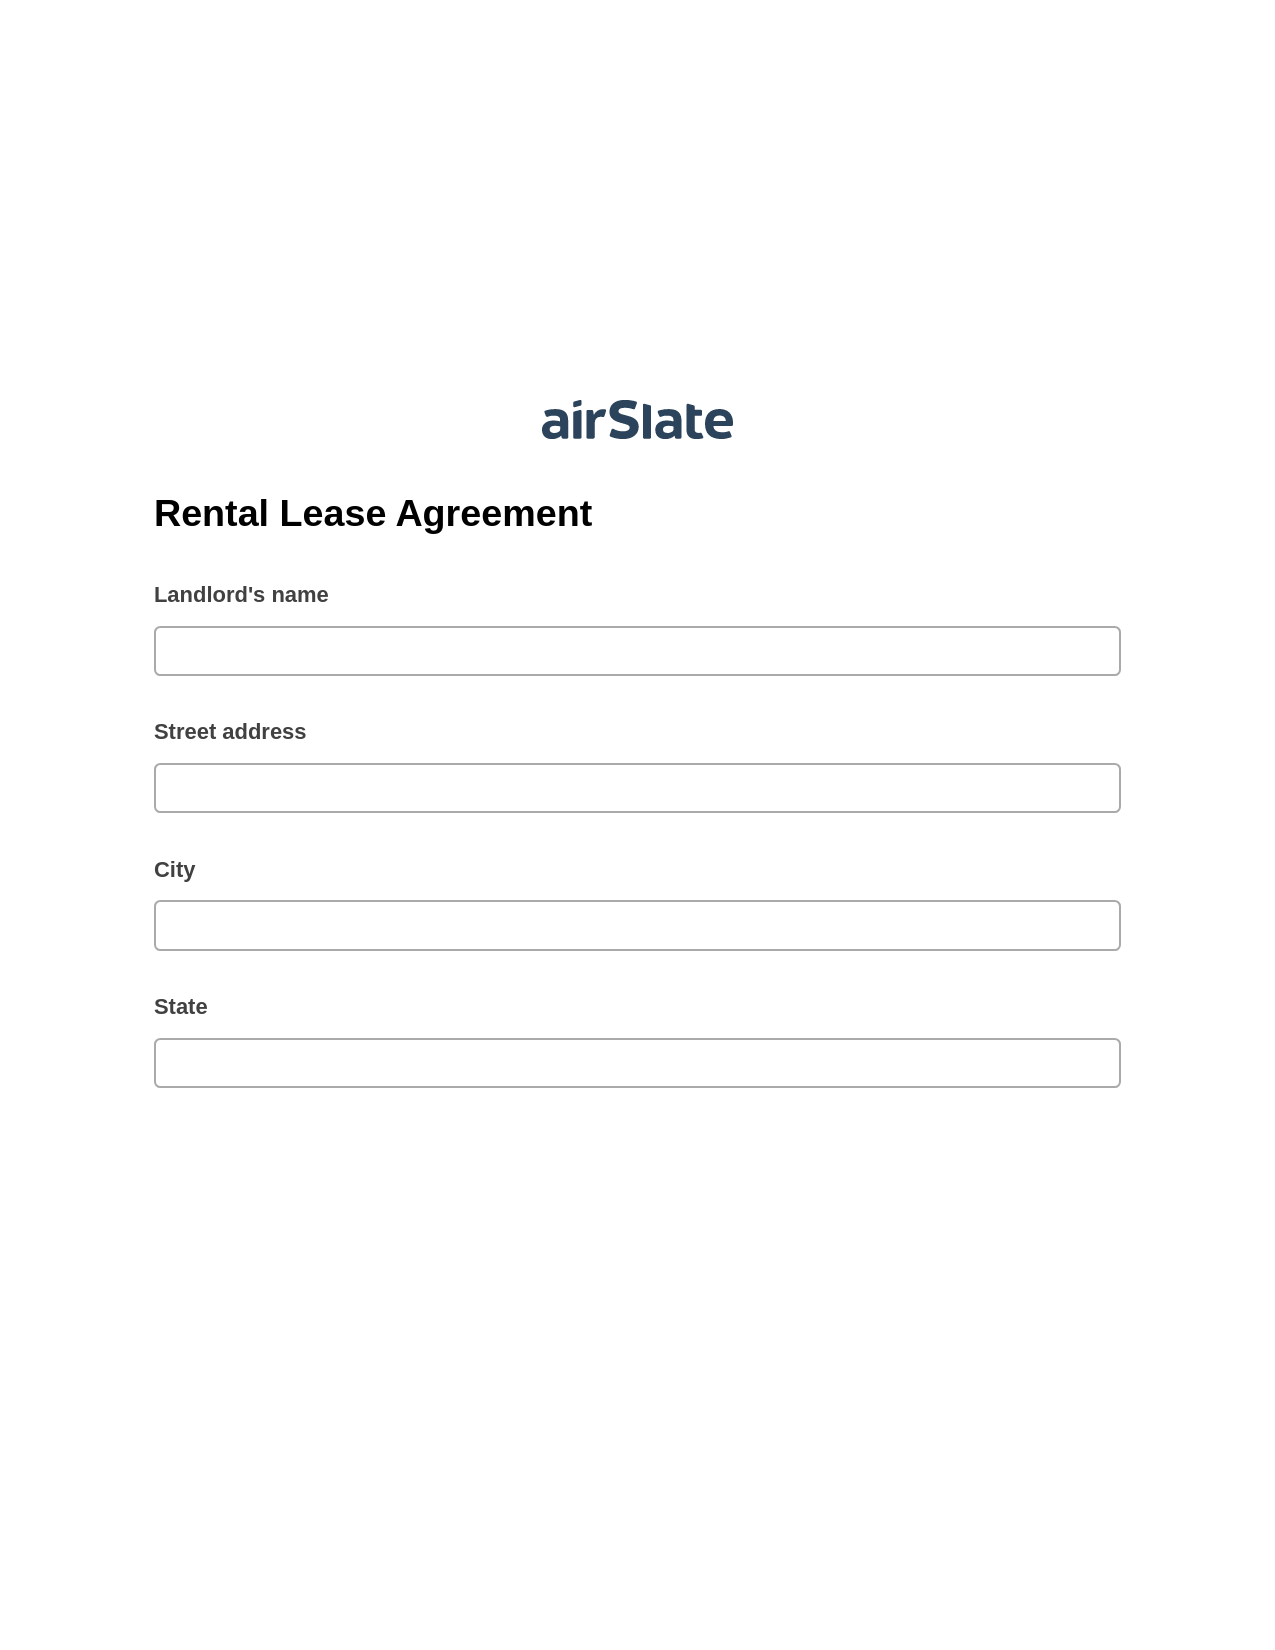 Rental Lease Agreement Pre-fill from MySQL Dropdown Options Bot, Invoke Salesforce Process Bot, Export to MySQL Bot